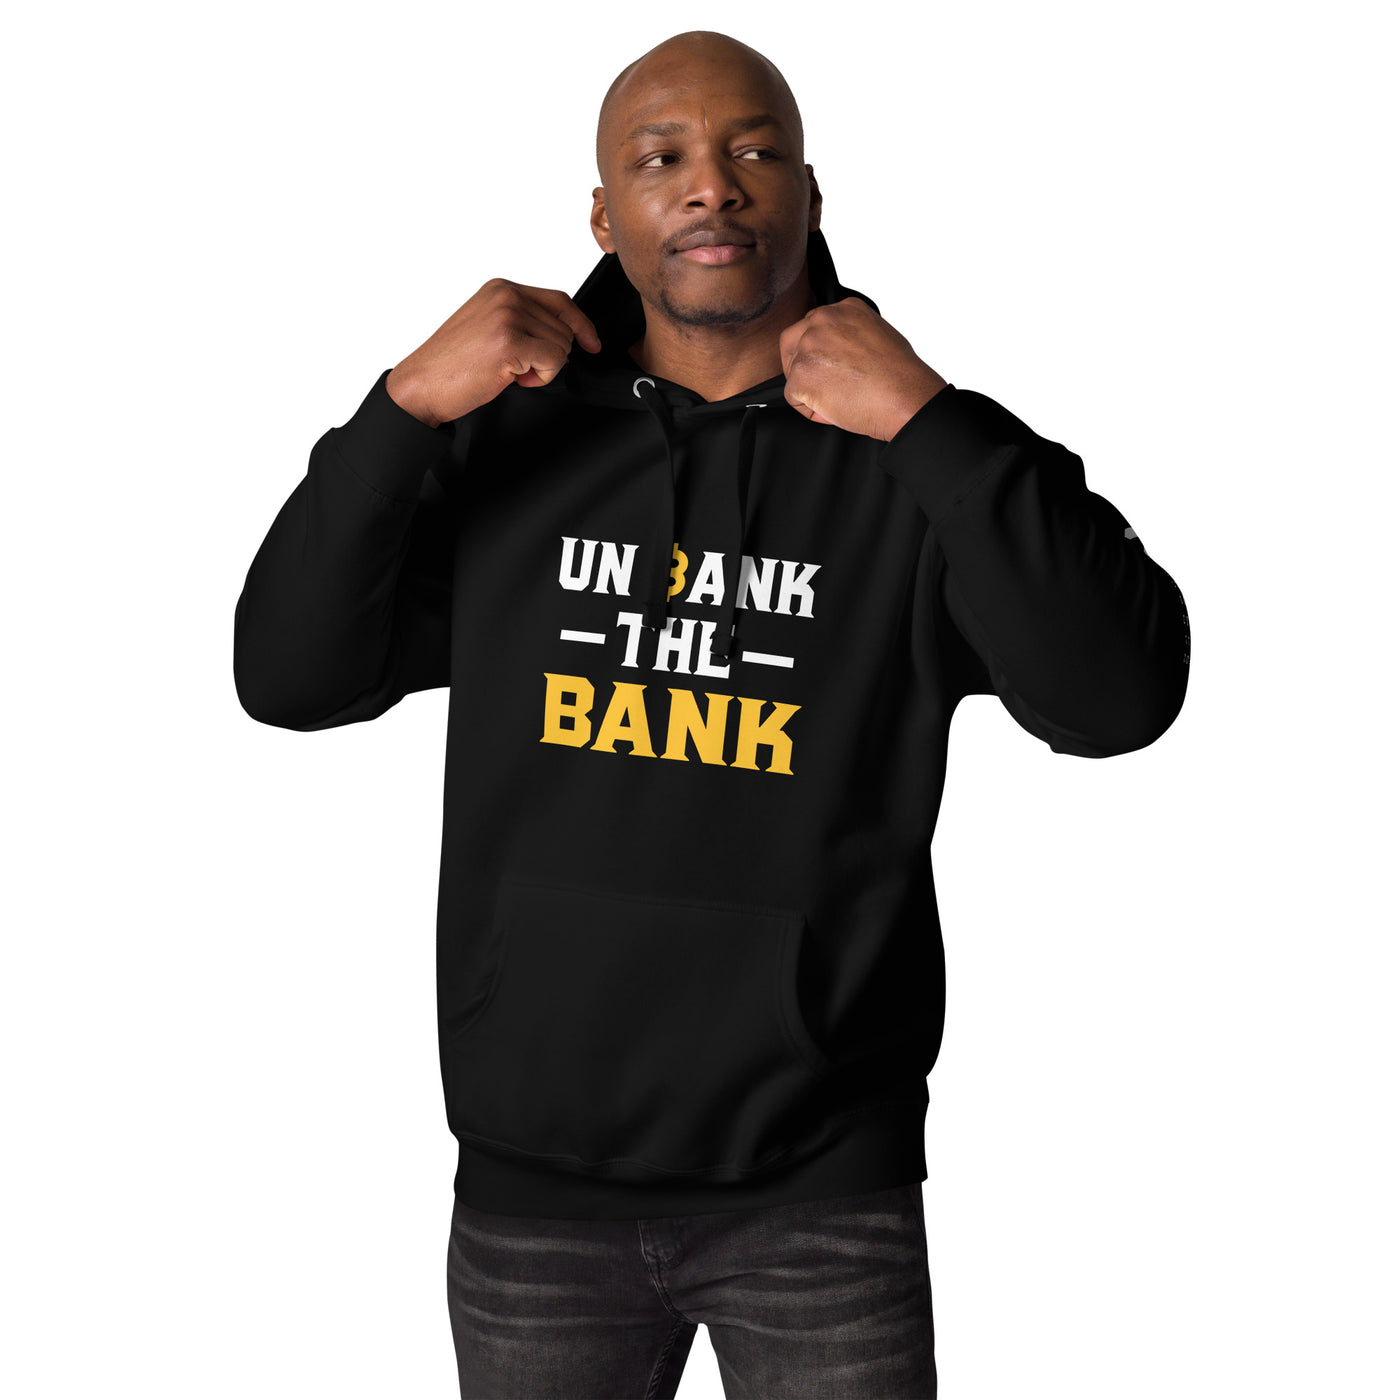 Unbank the Bank - Unisex Hoodie